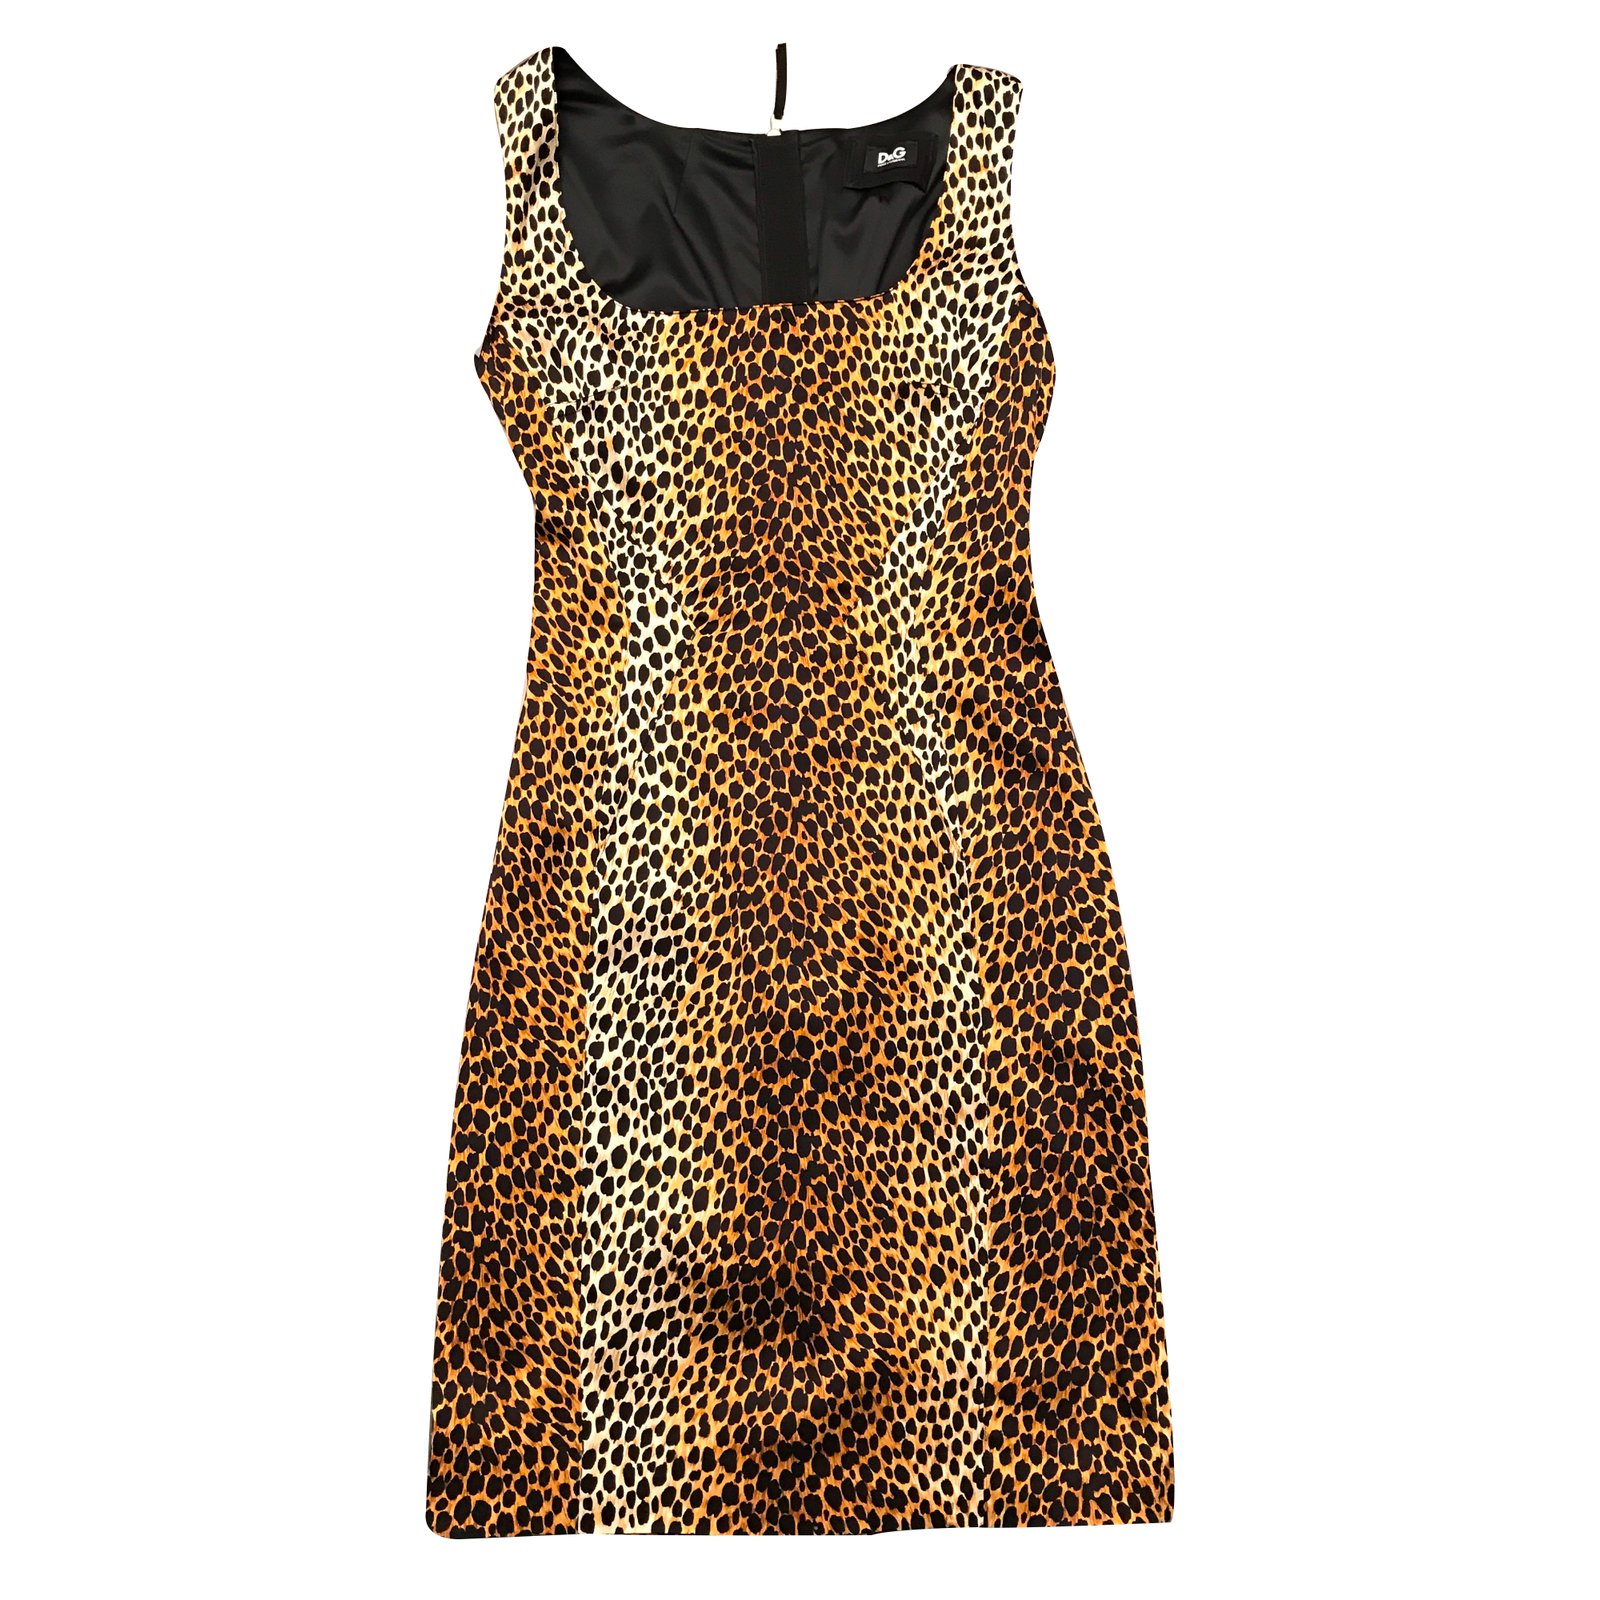 D\u0026G Dress Dresses Other Leopard print 